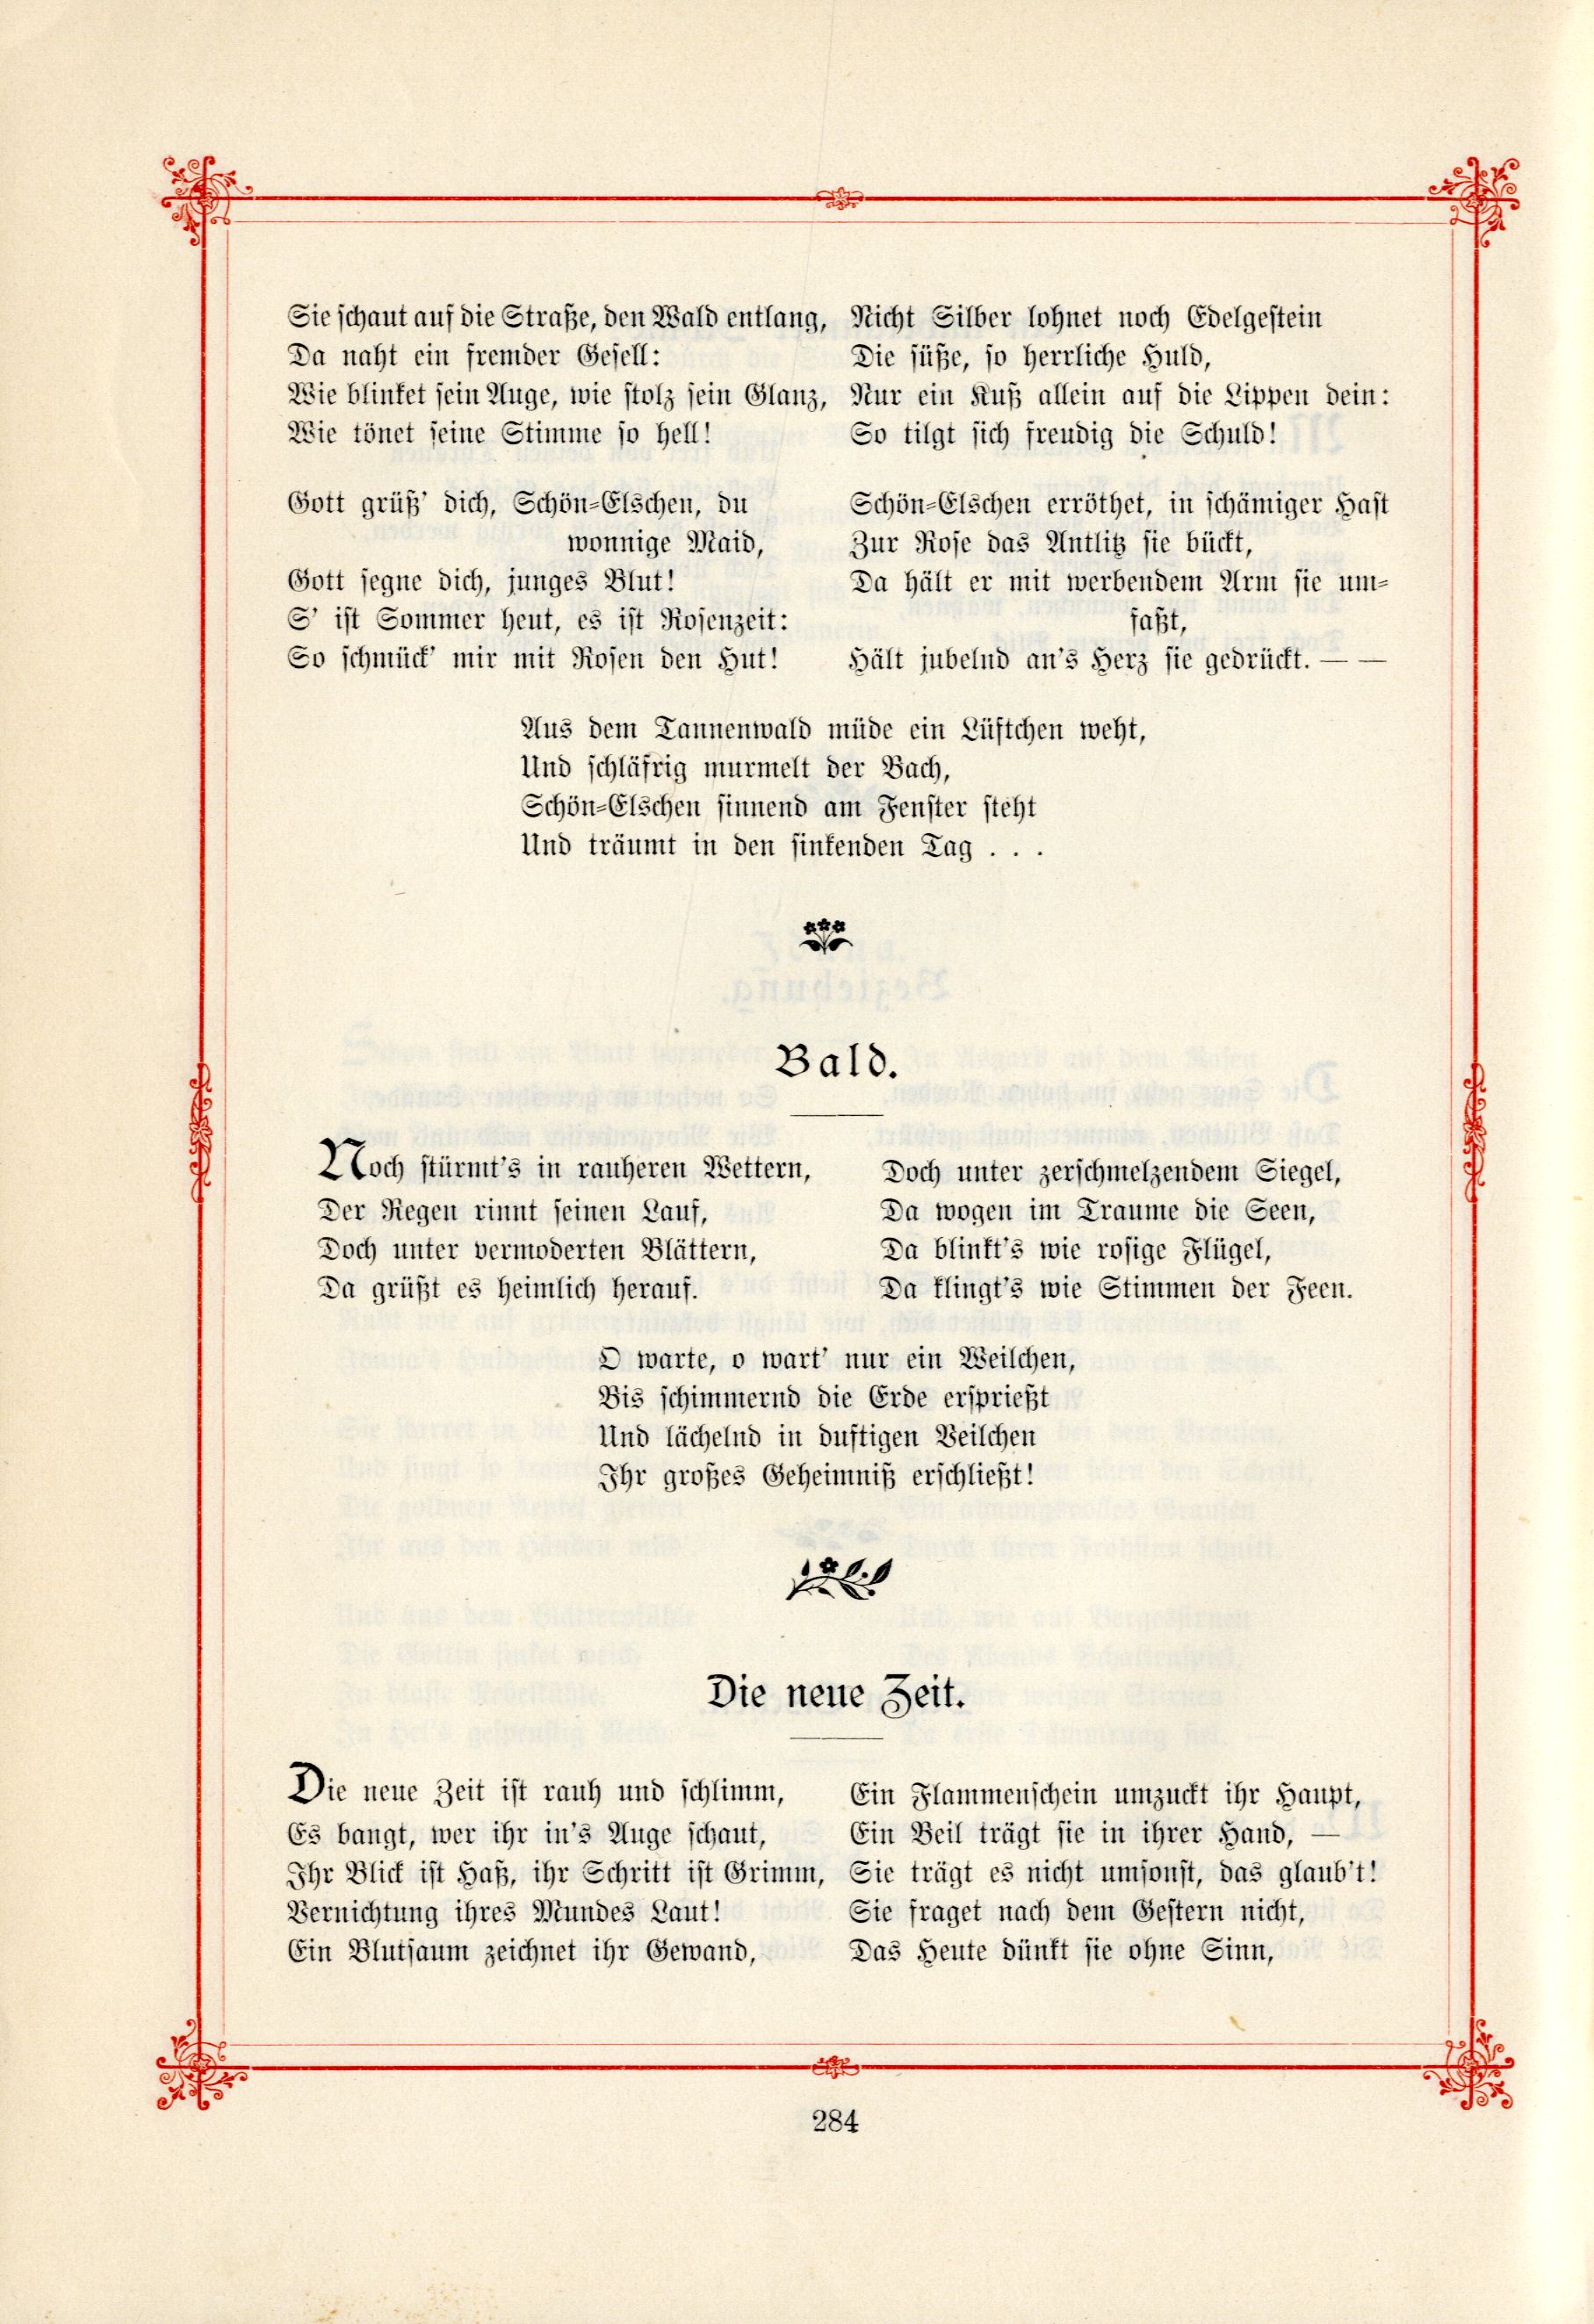 Das Baltische Dichterbuch (1895) | 330. (284) Основной текст